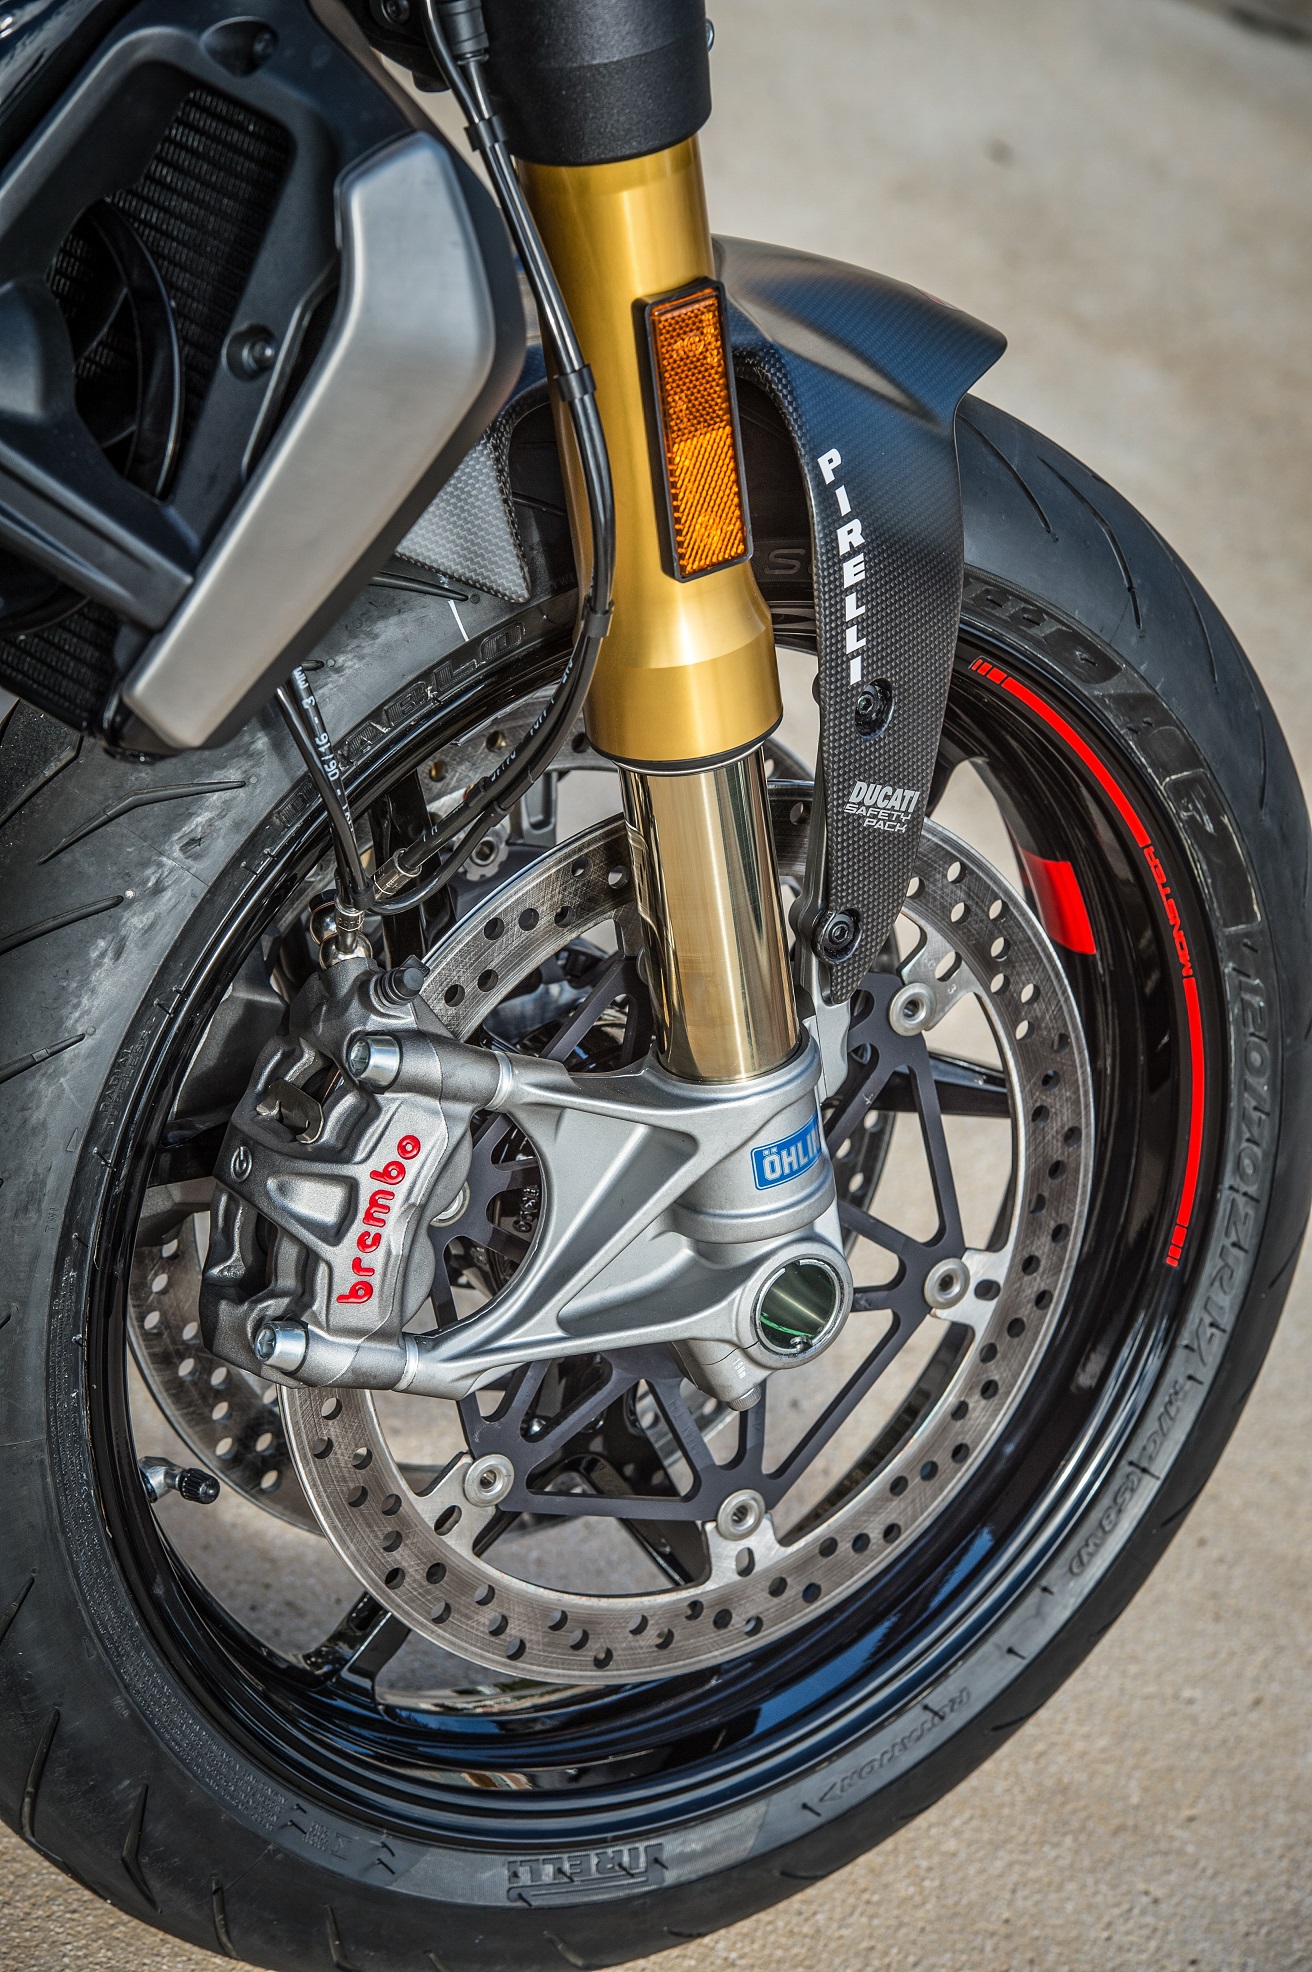 2017 Ducati Monster 1200 S Brembo brakes and Ohlins forks